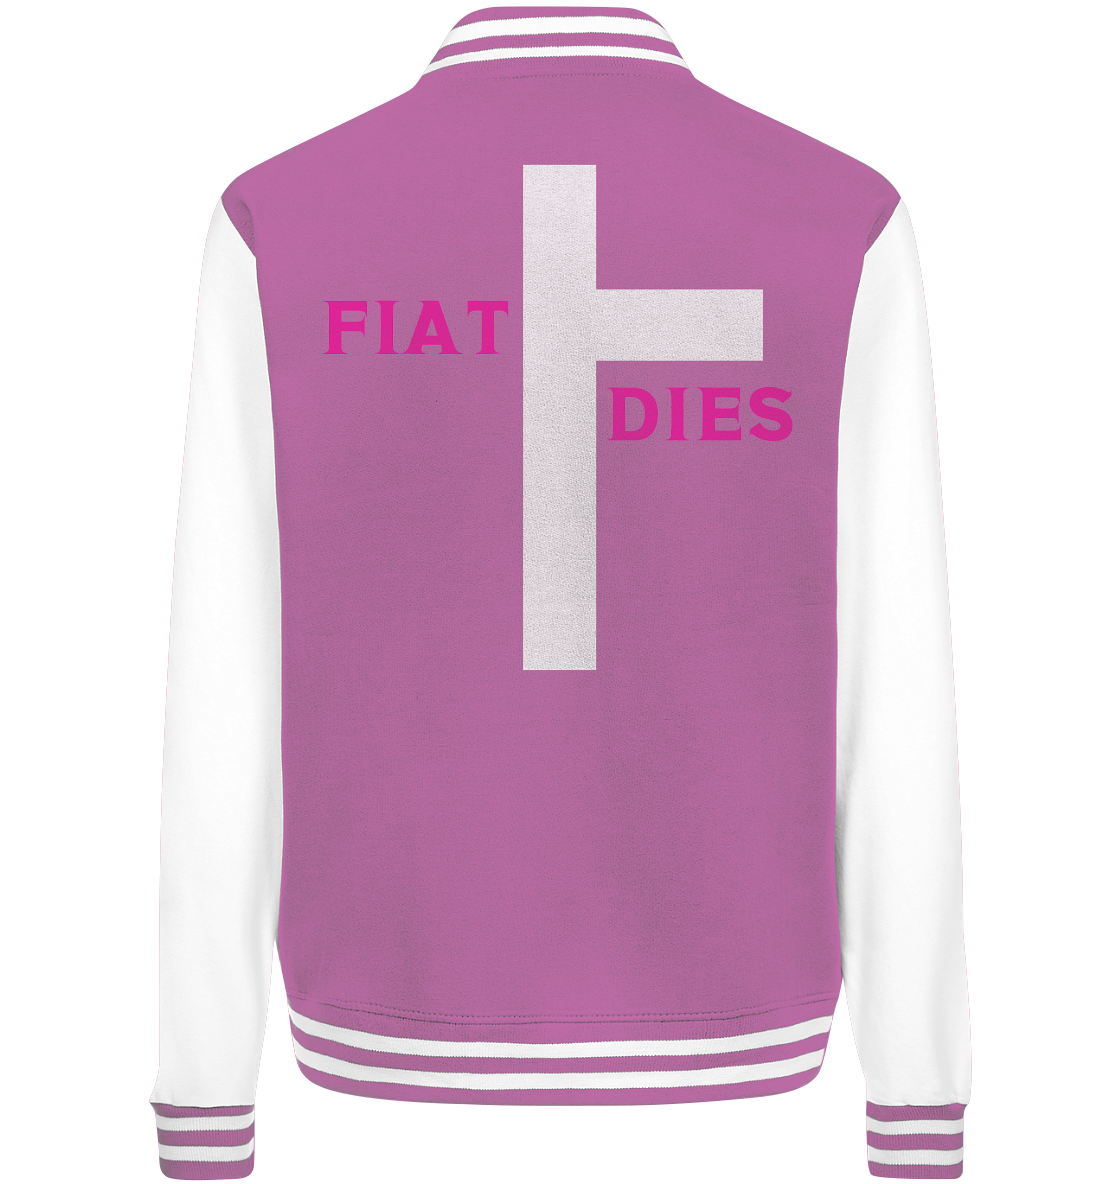 FIAT DIES (pink / pink) - Ladies Collection  - College Jacket